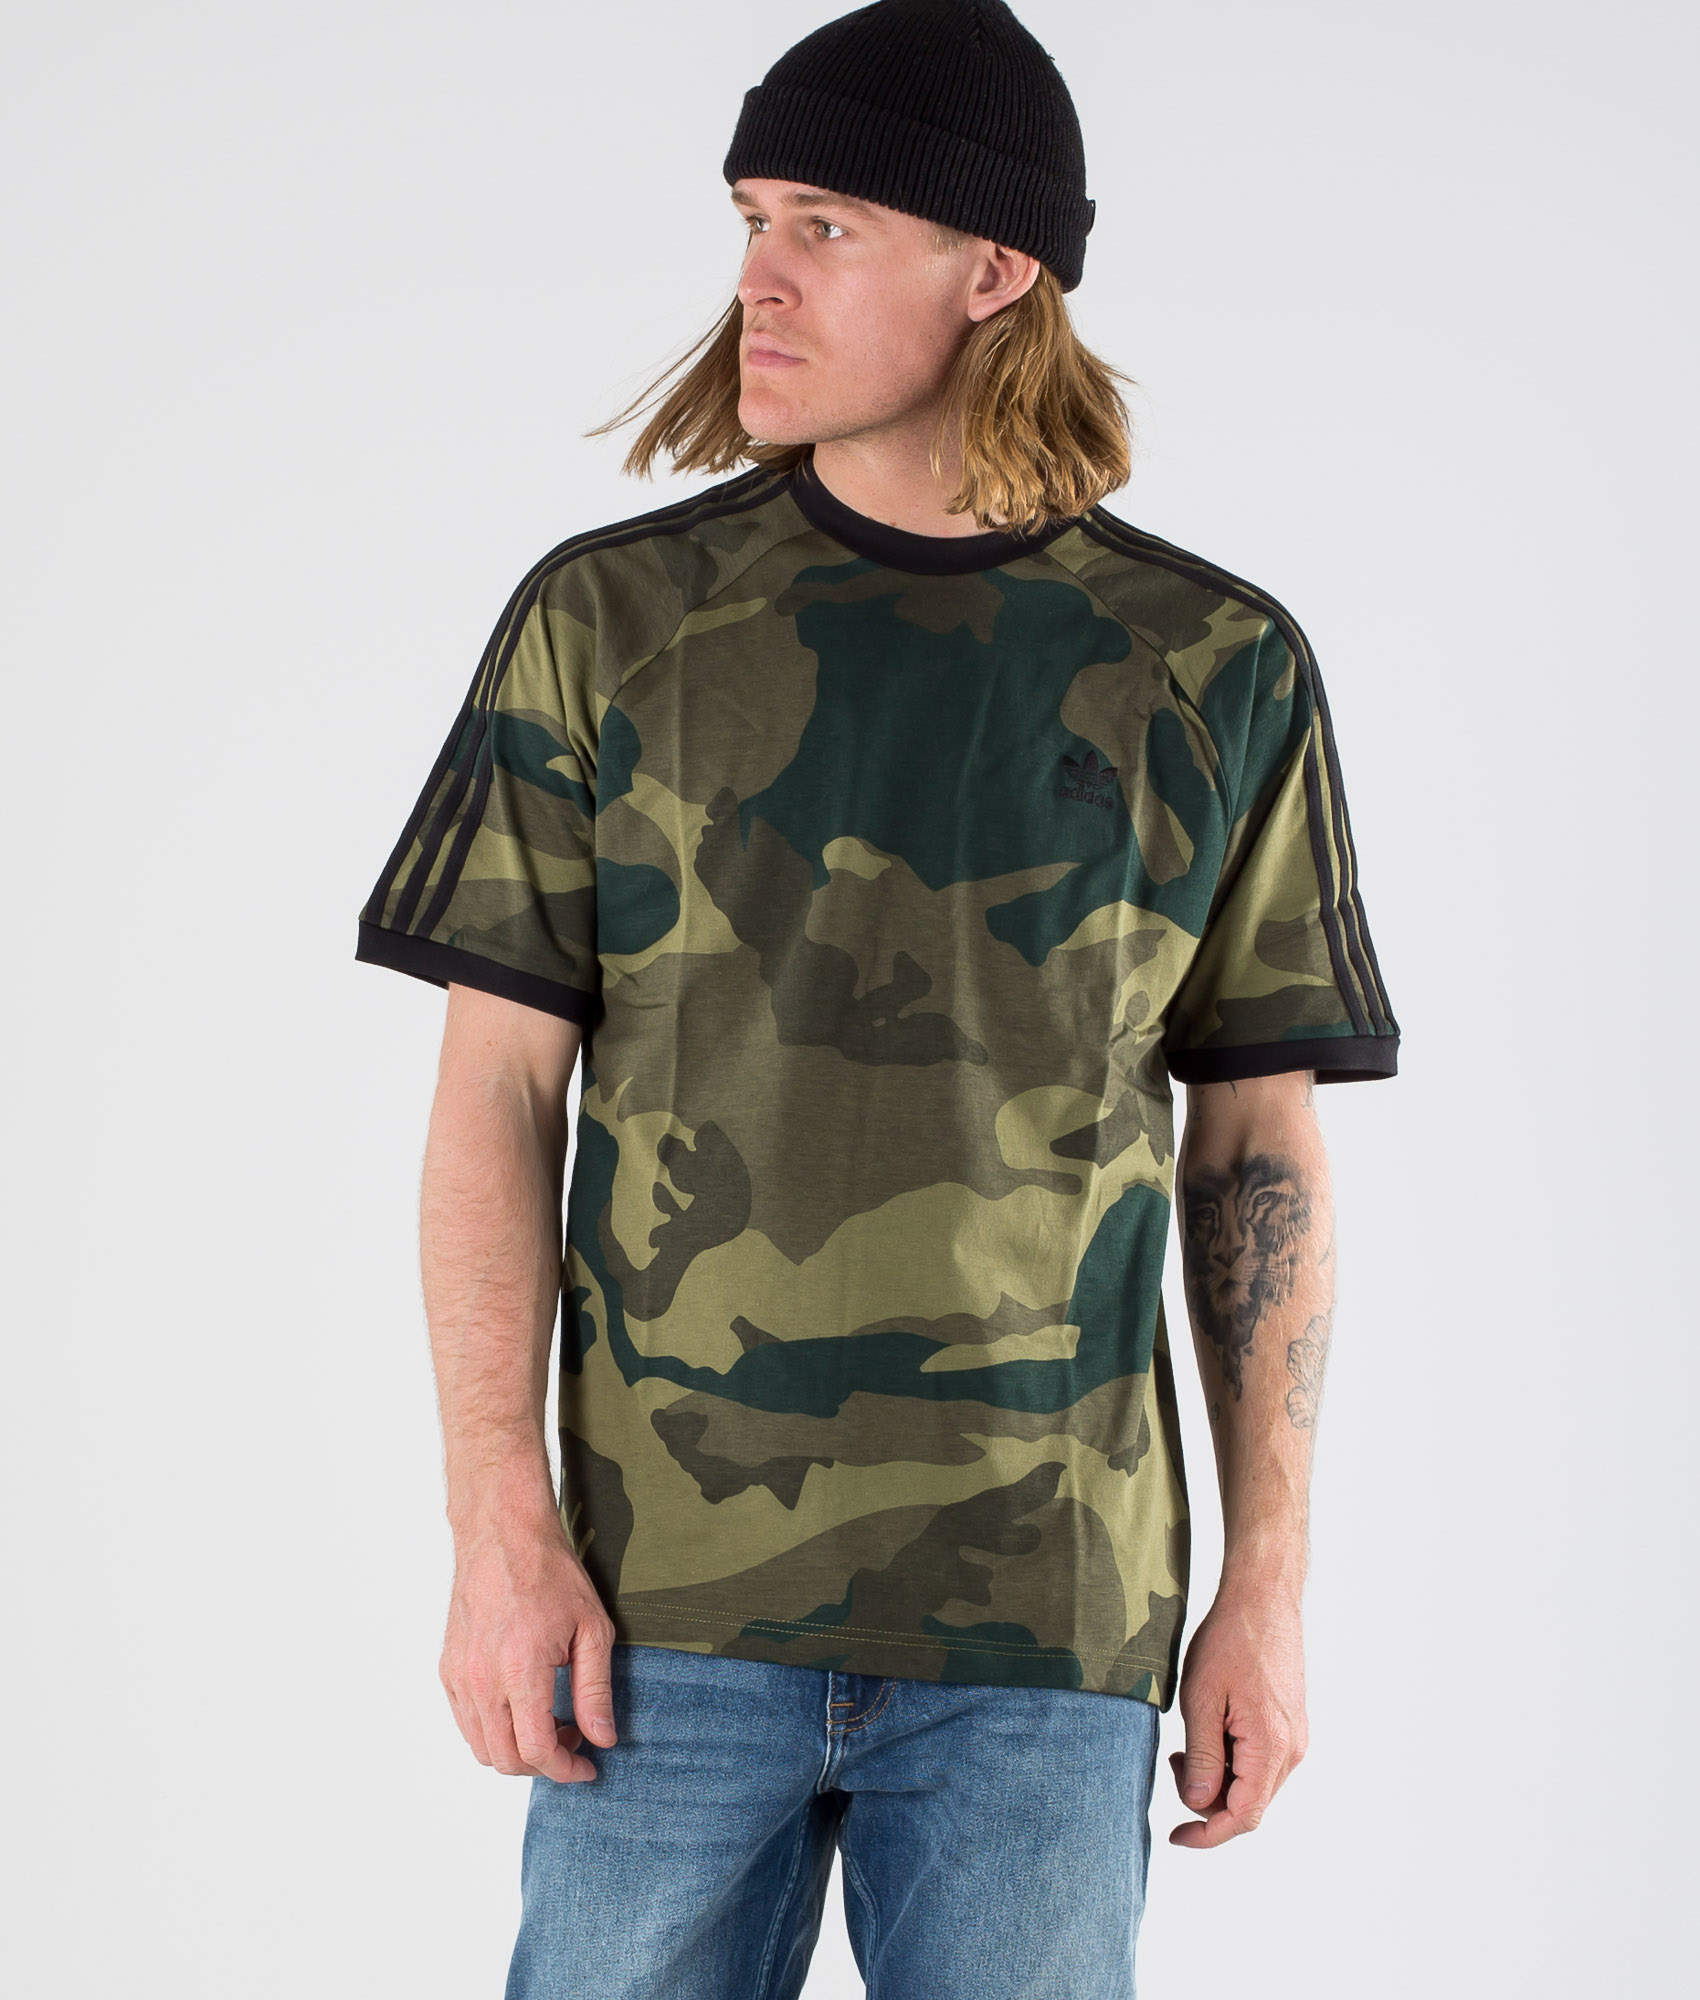 adidas shirt camouflage online